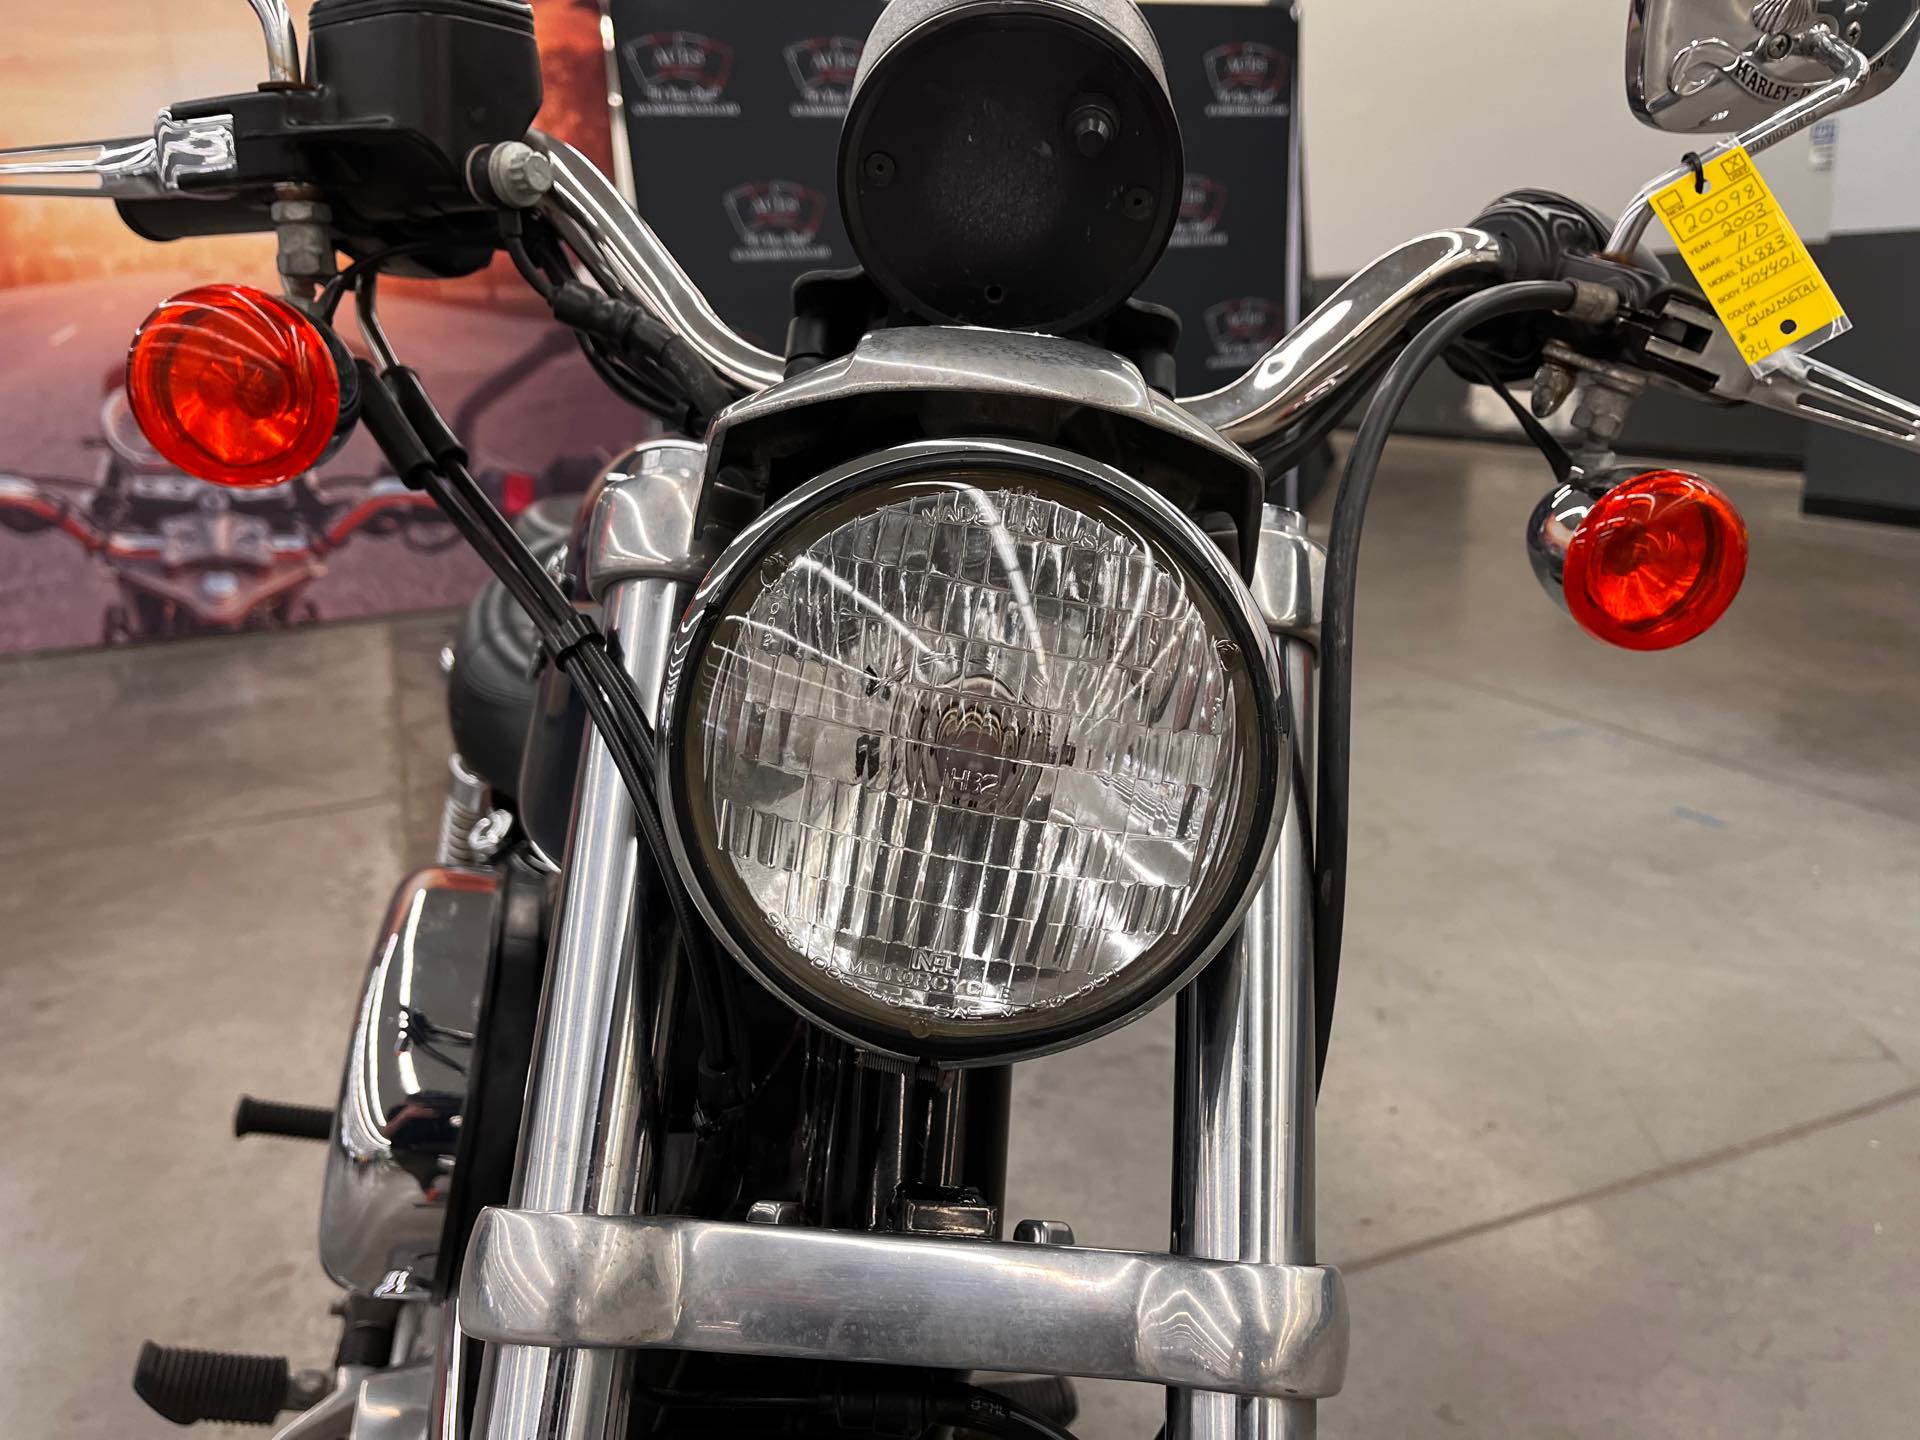 2003 Harley-Davidson XL883 at Aces Motorcycles - Denver